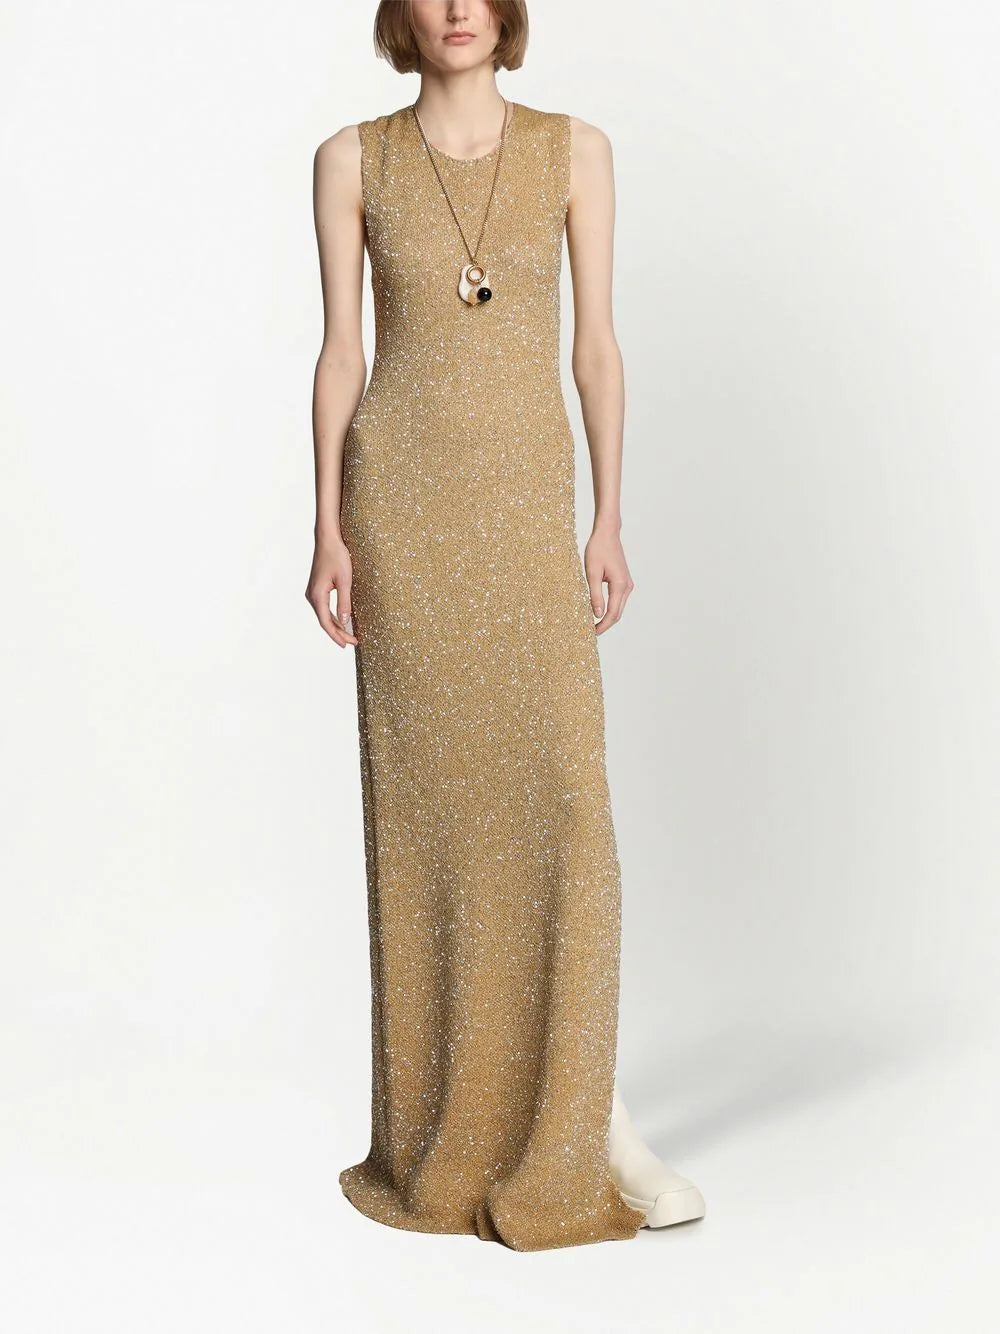 Sequin-embellished knitted dress, pale gold